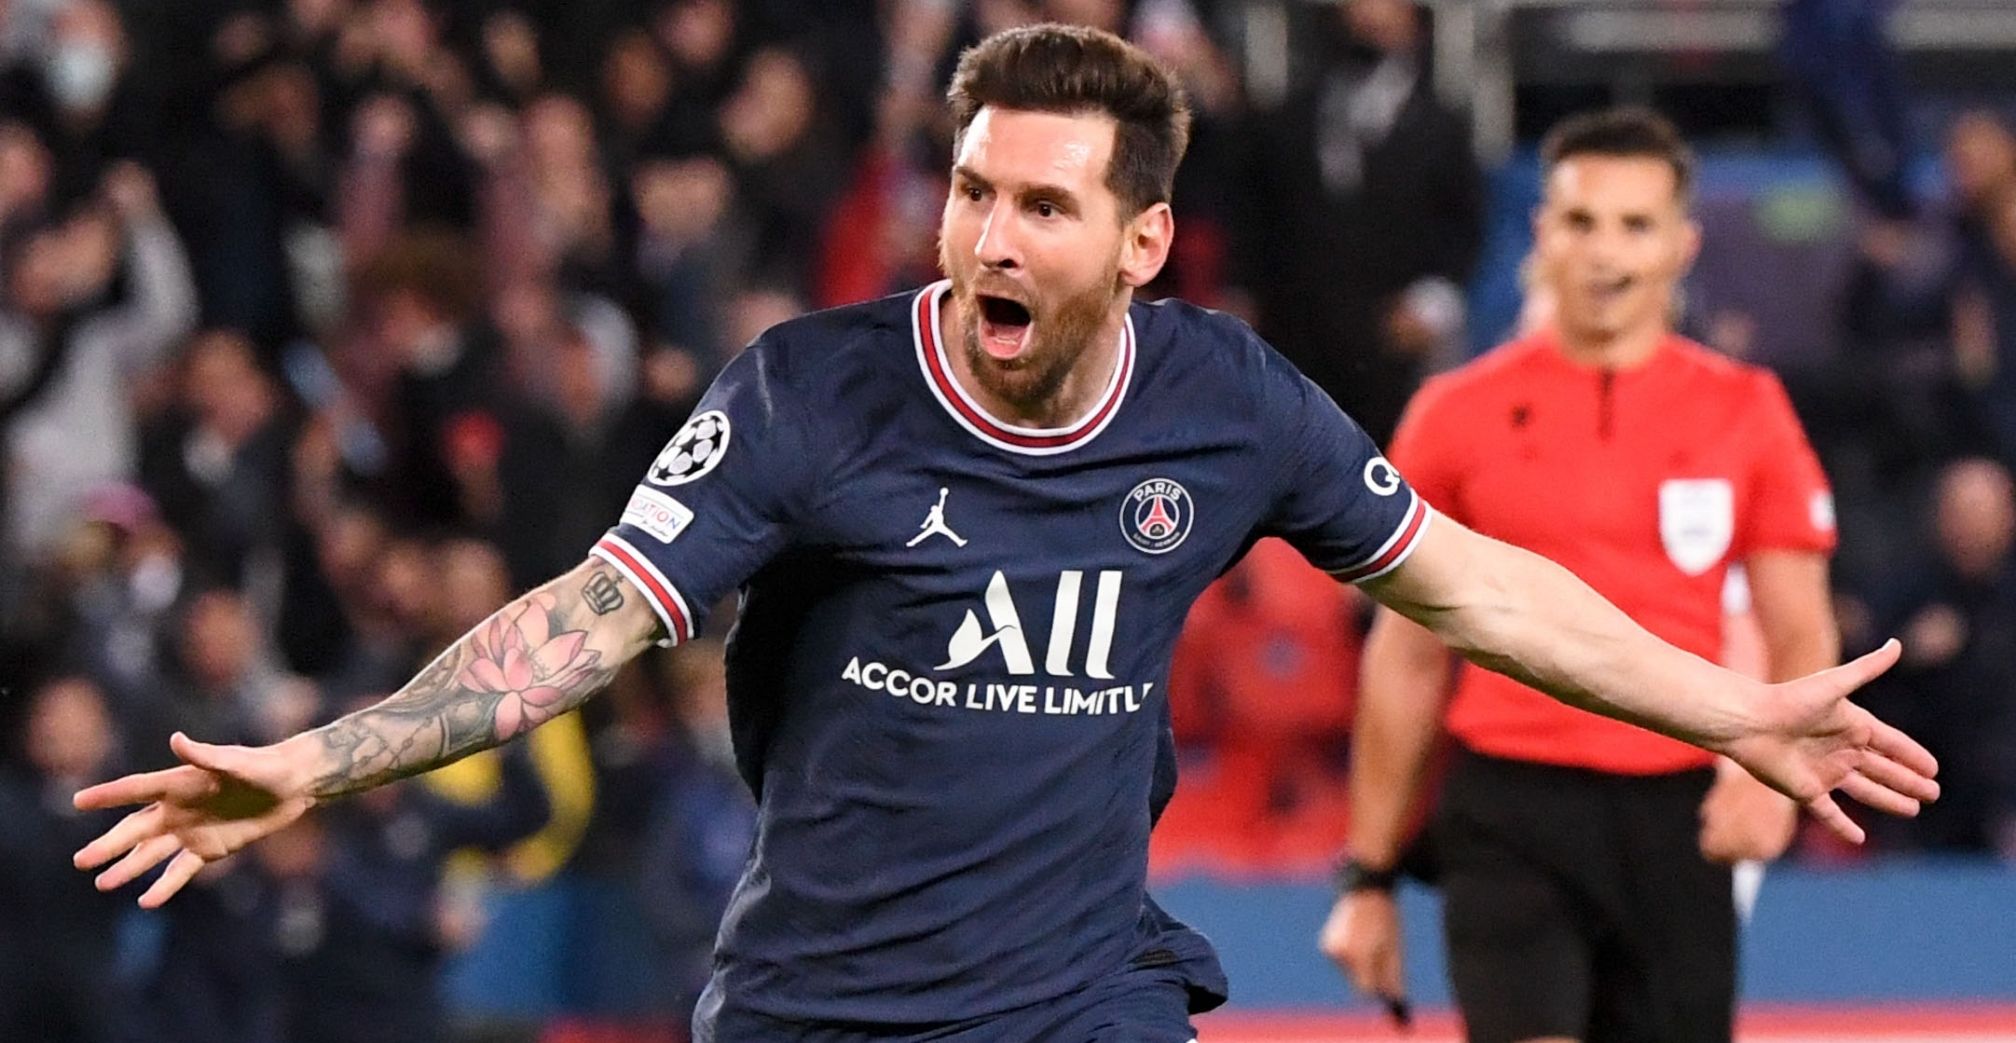 Messi pasuron ligën franceze